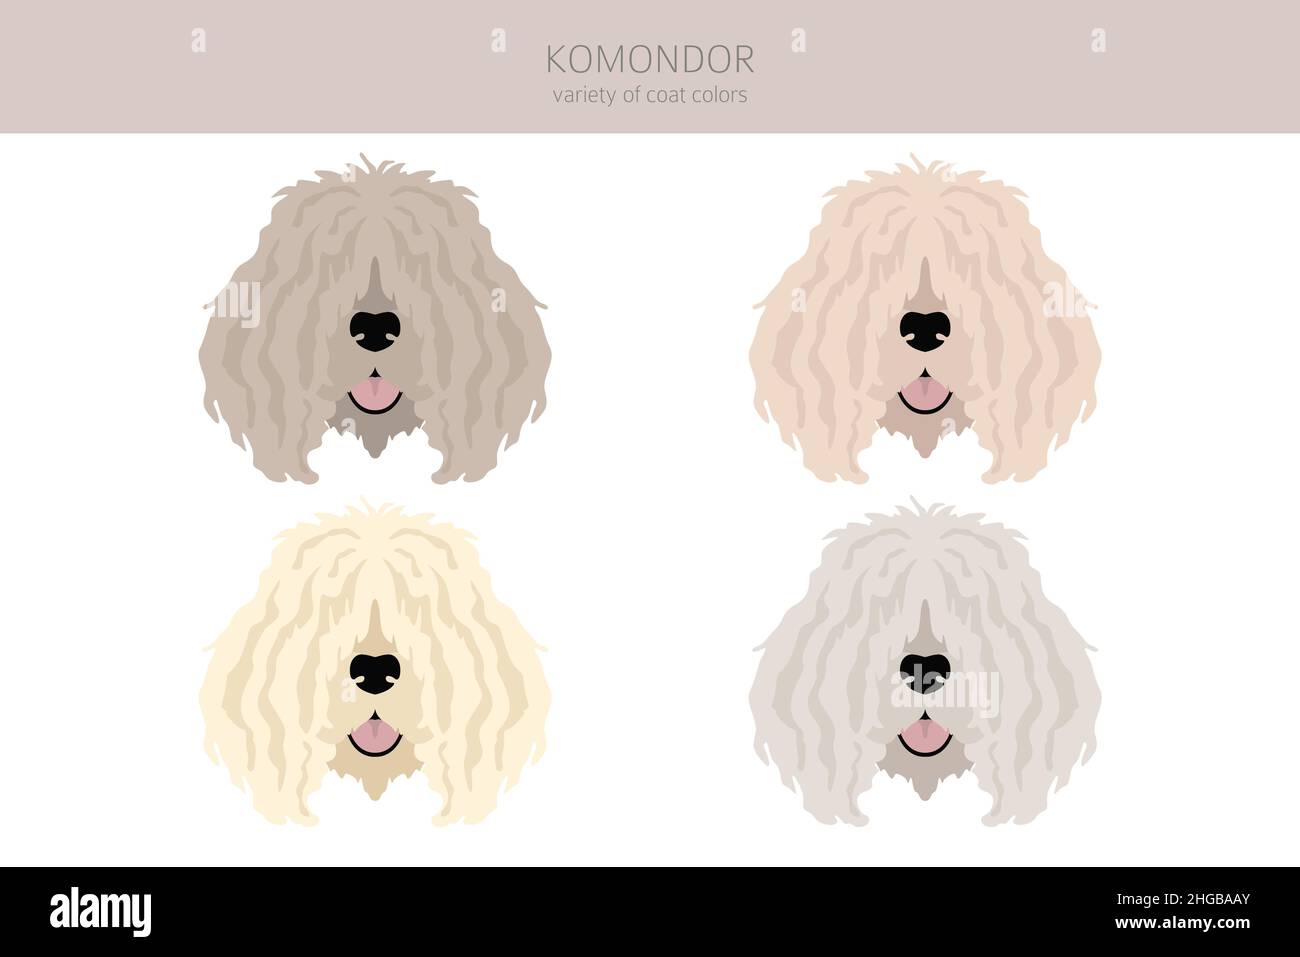 Komondor clipart. Different poses, coat colors set.  Vector illustration Stock Vector